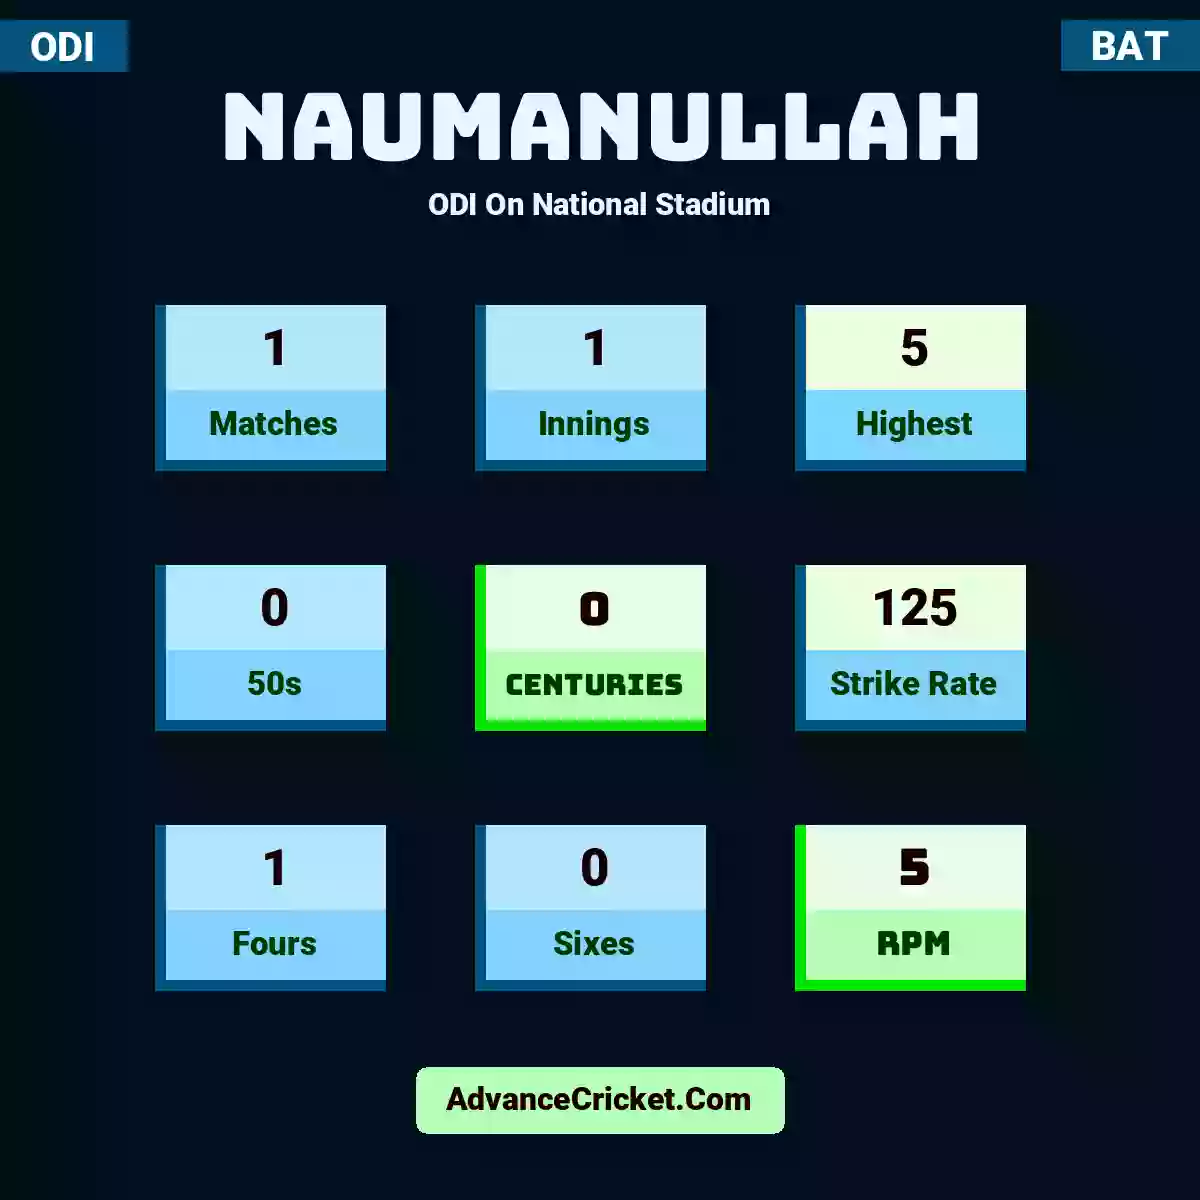 Naumanullah ODI  On National Stadium, Naumanullah played 1 matches, scored 5 runs as highest, 0 half-centuries, and 0 centuries, with a strike rate of 125. N.Naumanullah hit 1 fours and 0 sixes, with an RPM of 5.